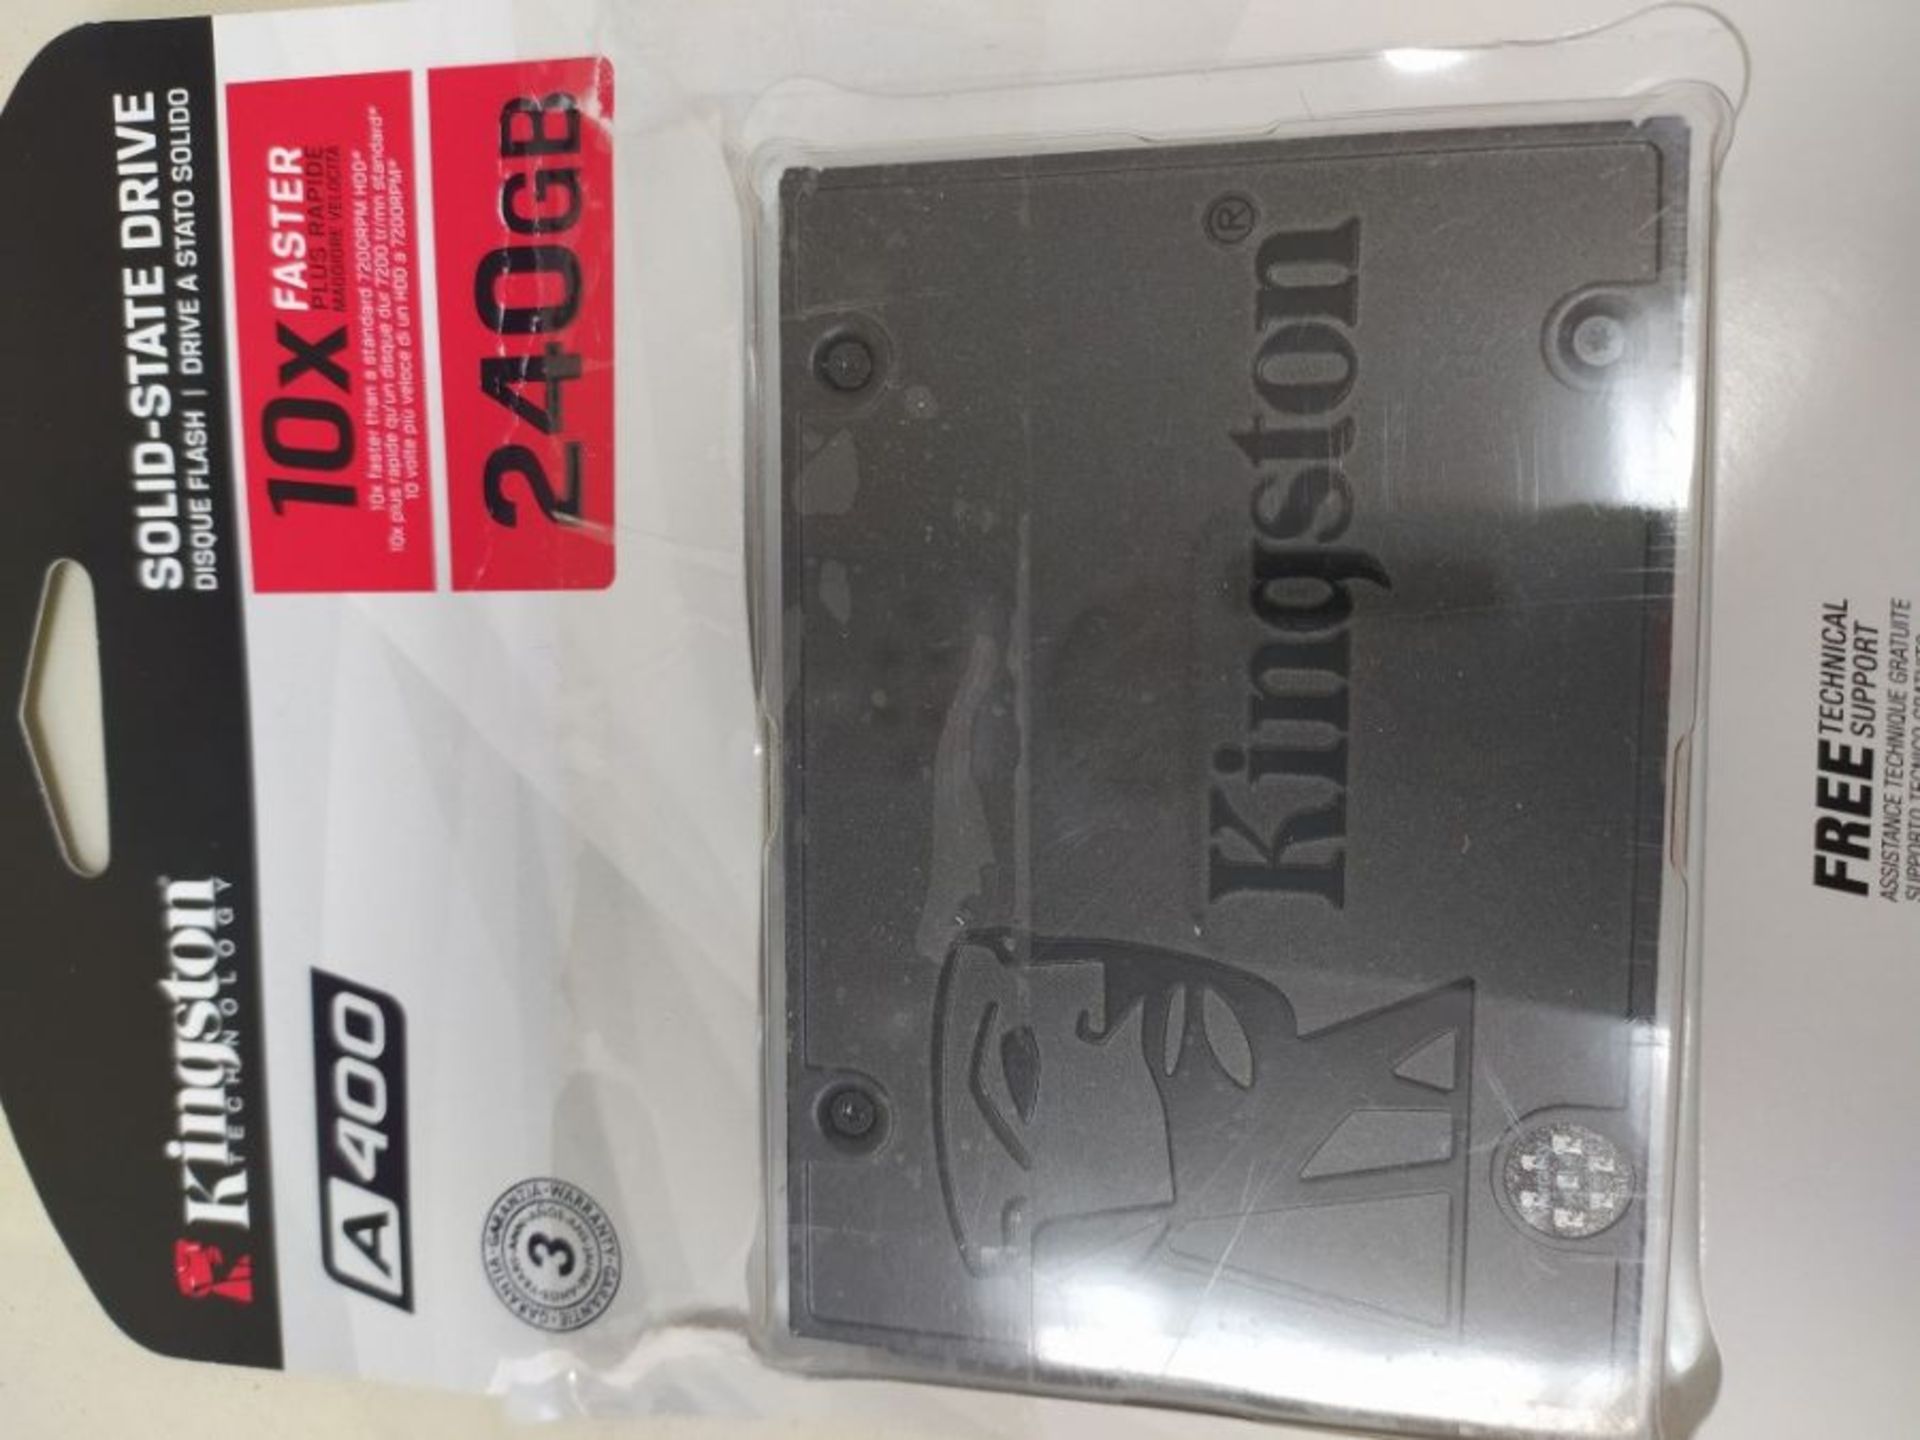 Kingston SSDNow A400 240GB SATA 3 Solid State Drive (SA400S37/240G), Black - Image 2 of 2